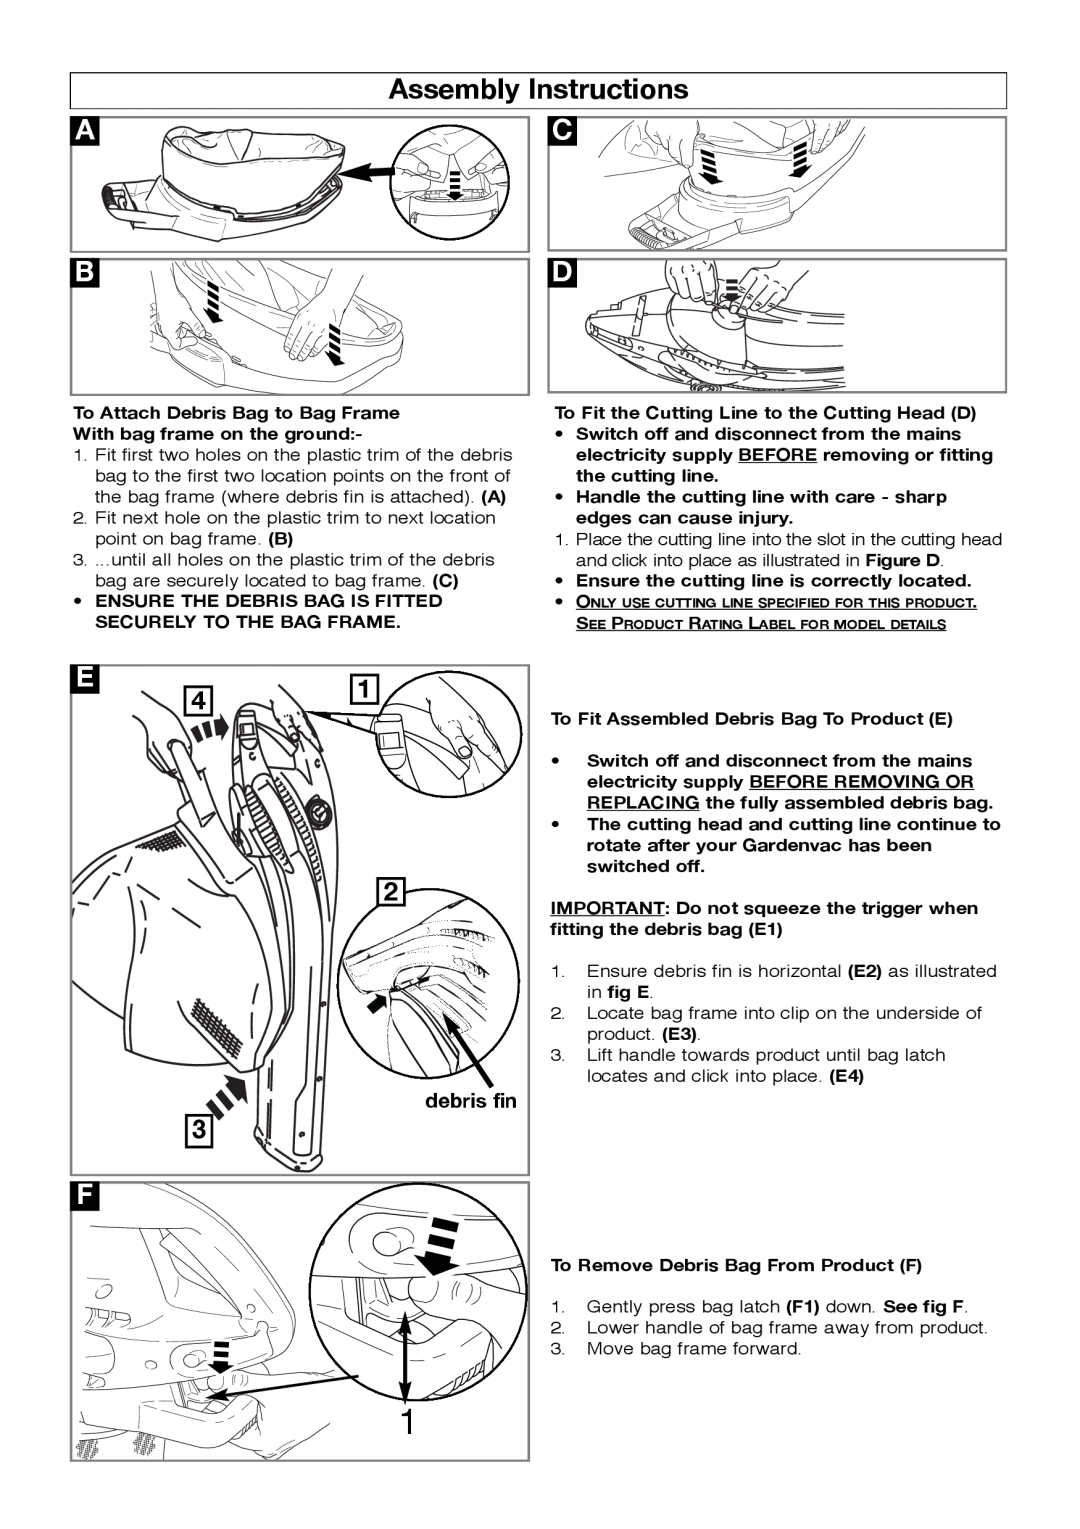 Flymo Garden Vac manual Assembly Instructions, debris fin 